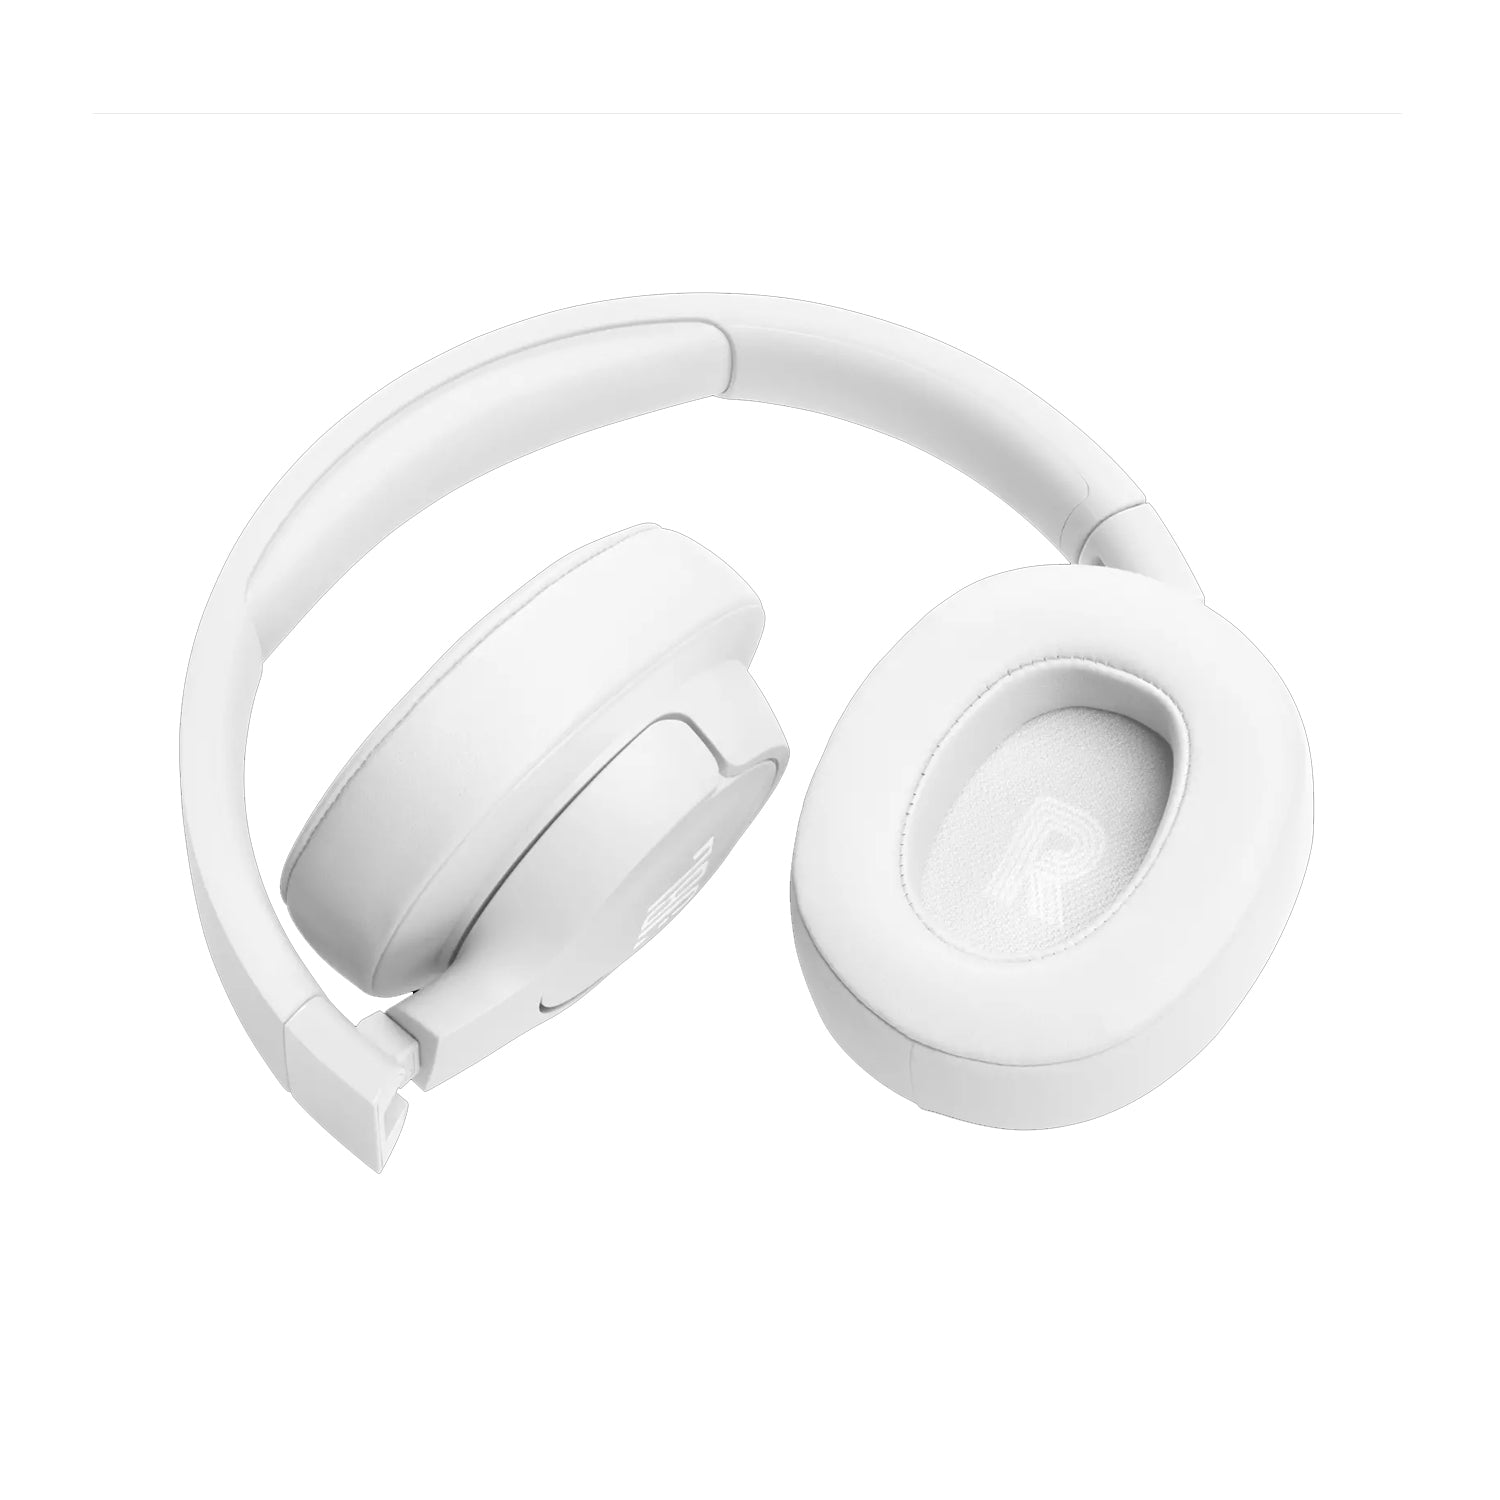 JBL Tune 720BT Wireless Over Ear Headphones with Mic, Pure Bass Sound, U